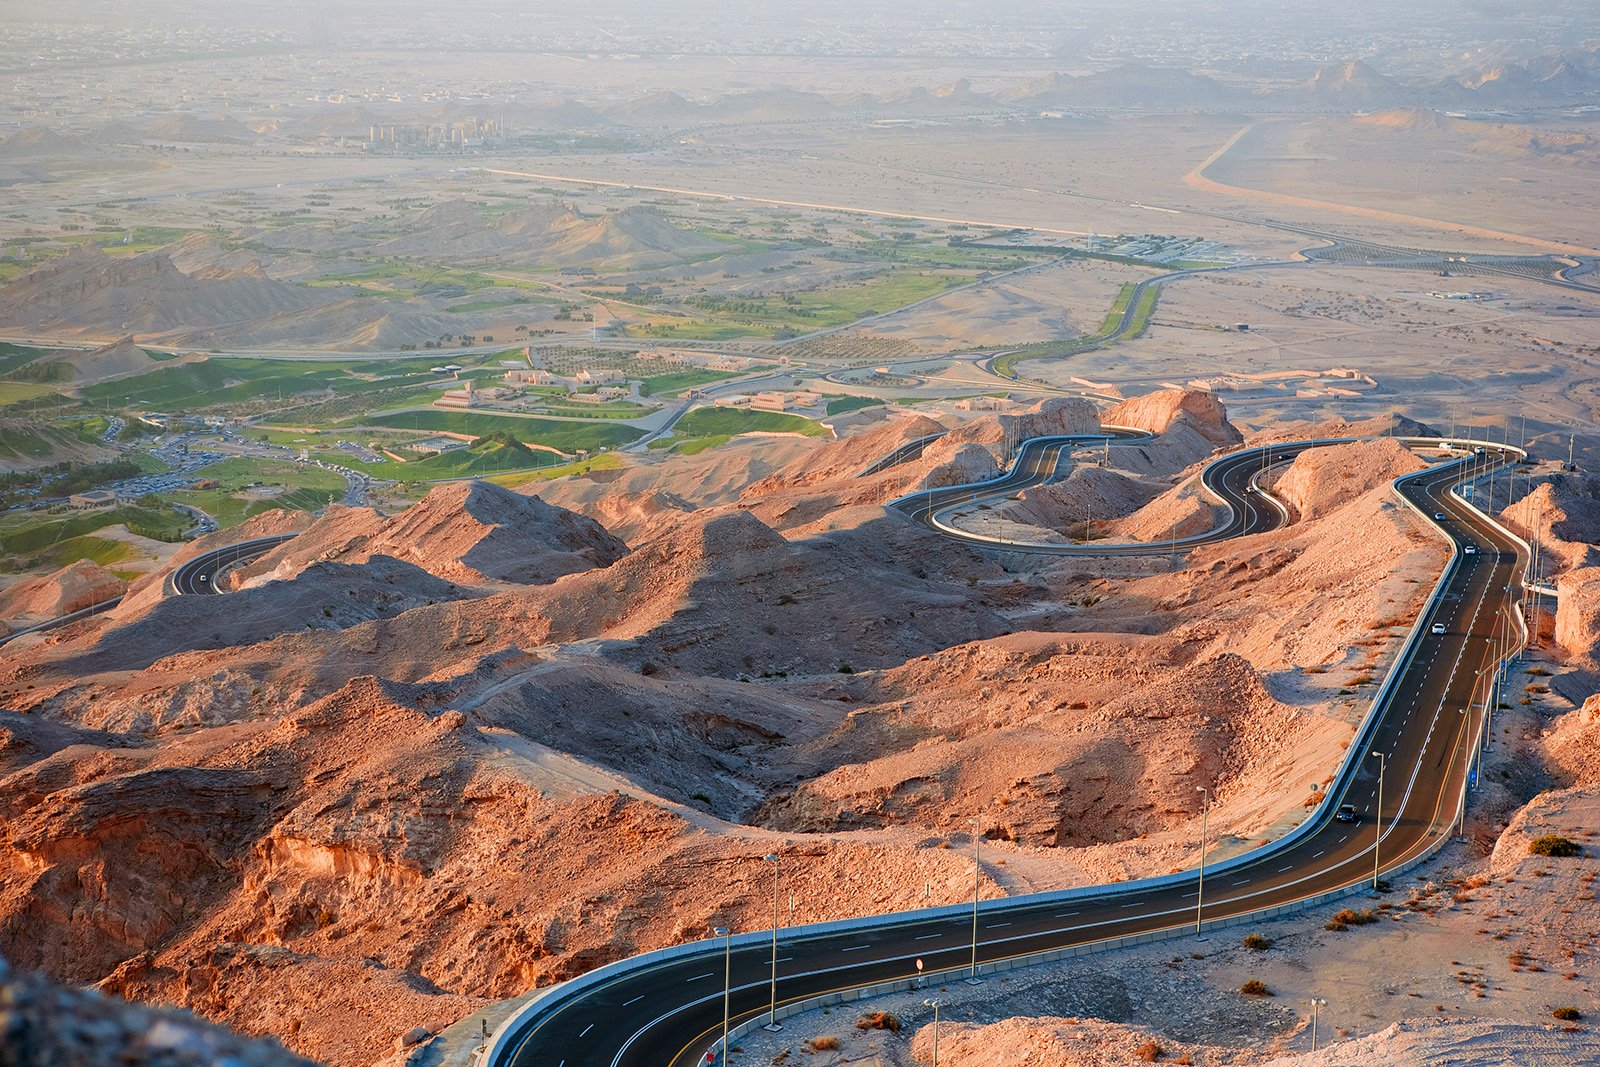 How to climb Jebel Hafeet mountain in Al Ain